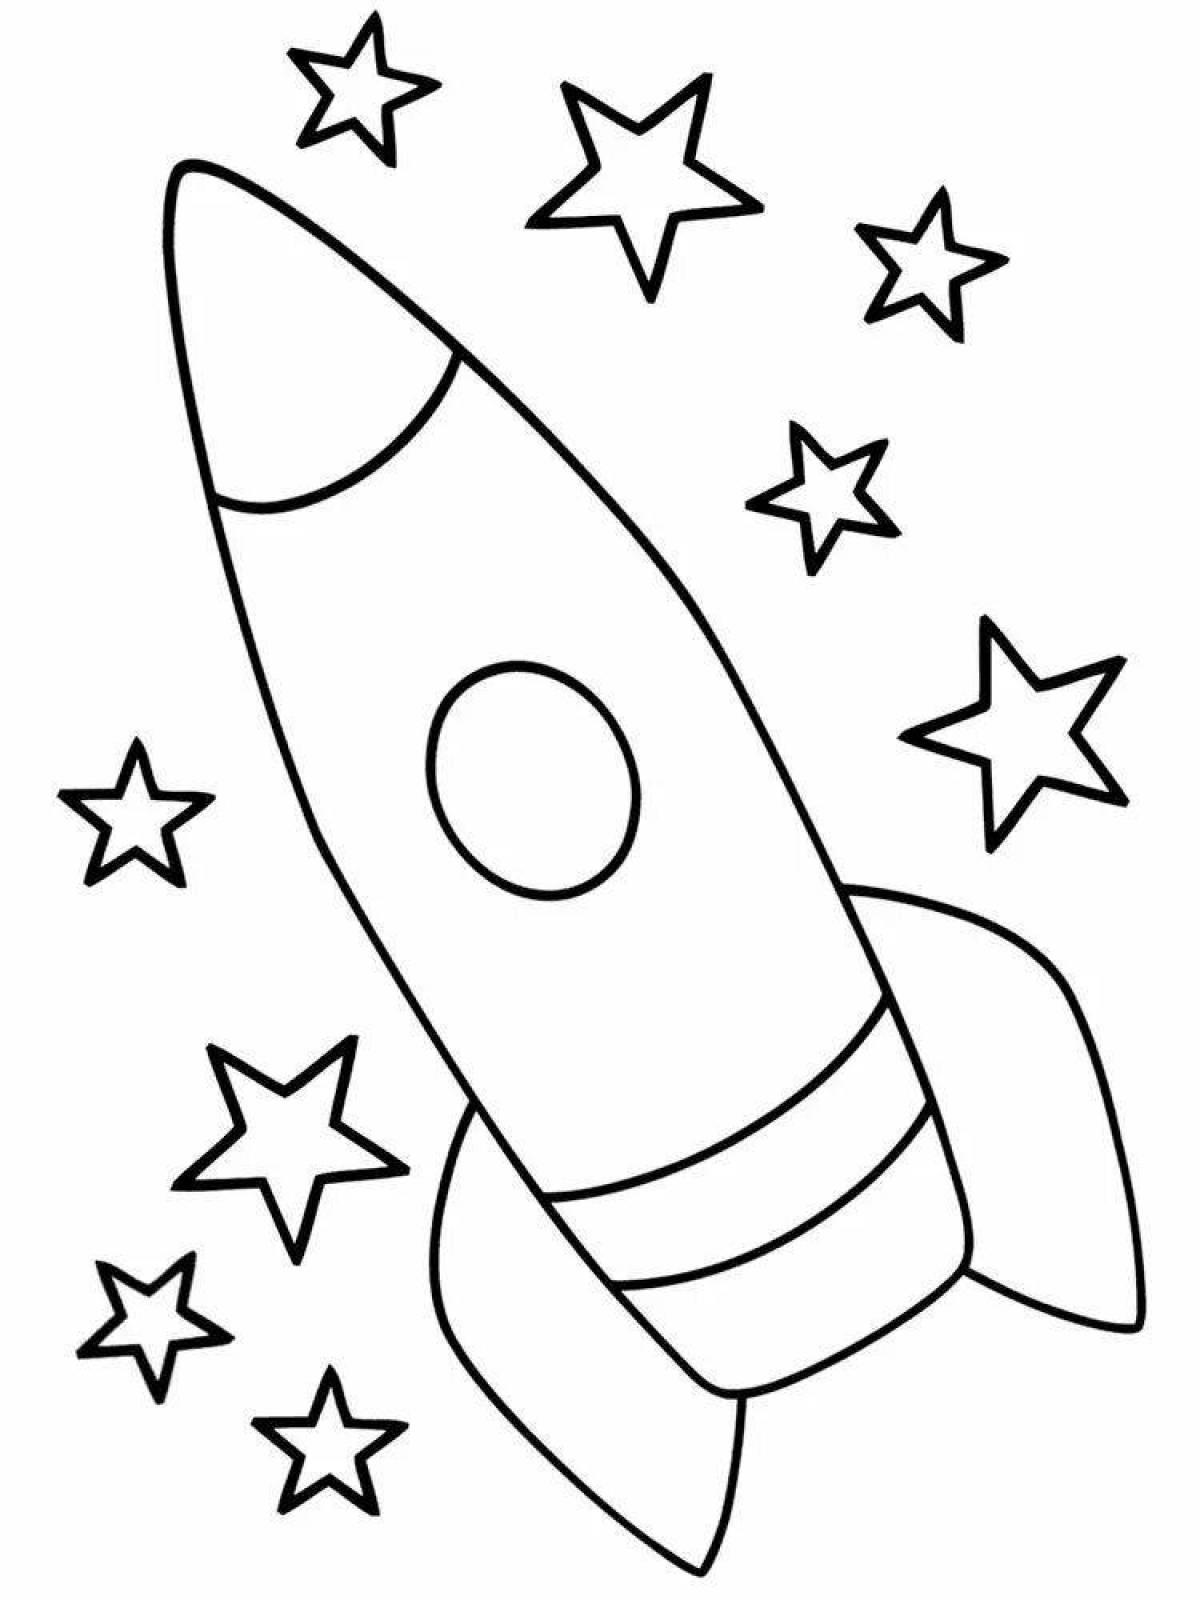 Impressive drawing of a rocket